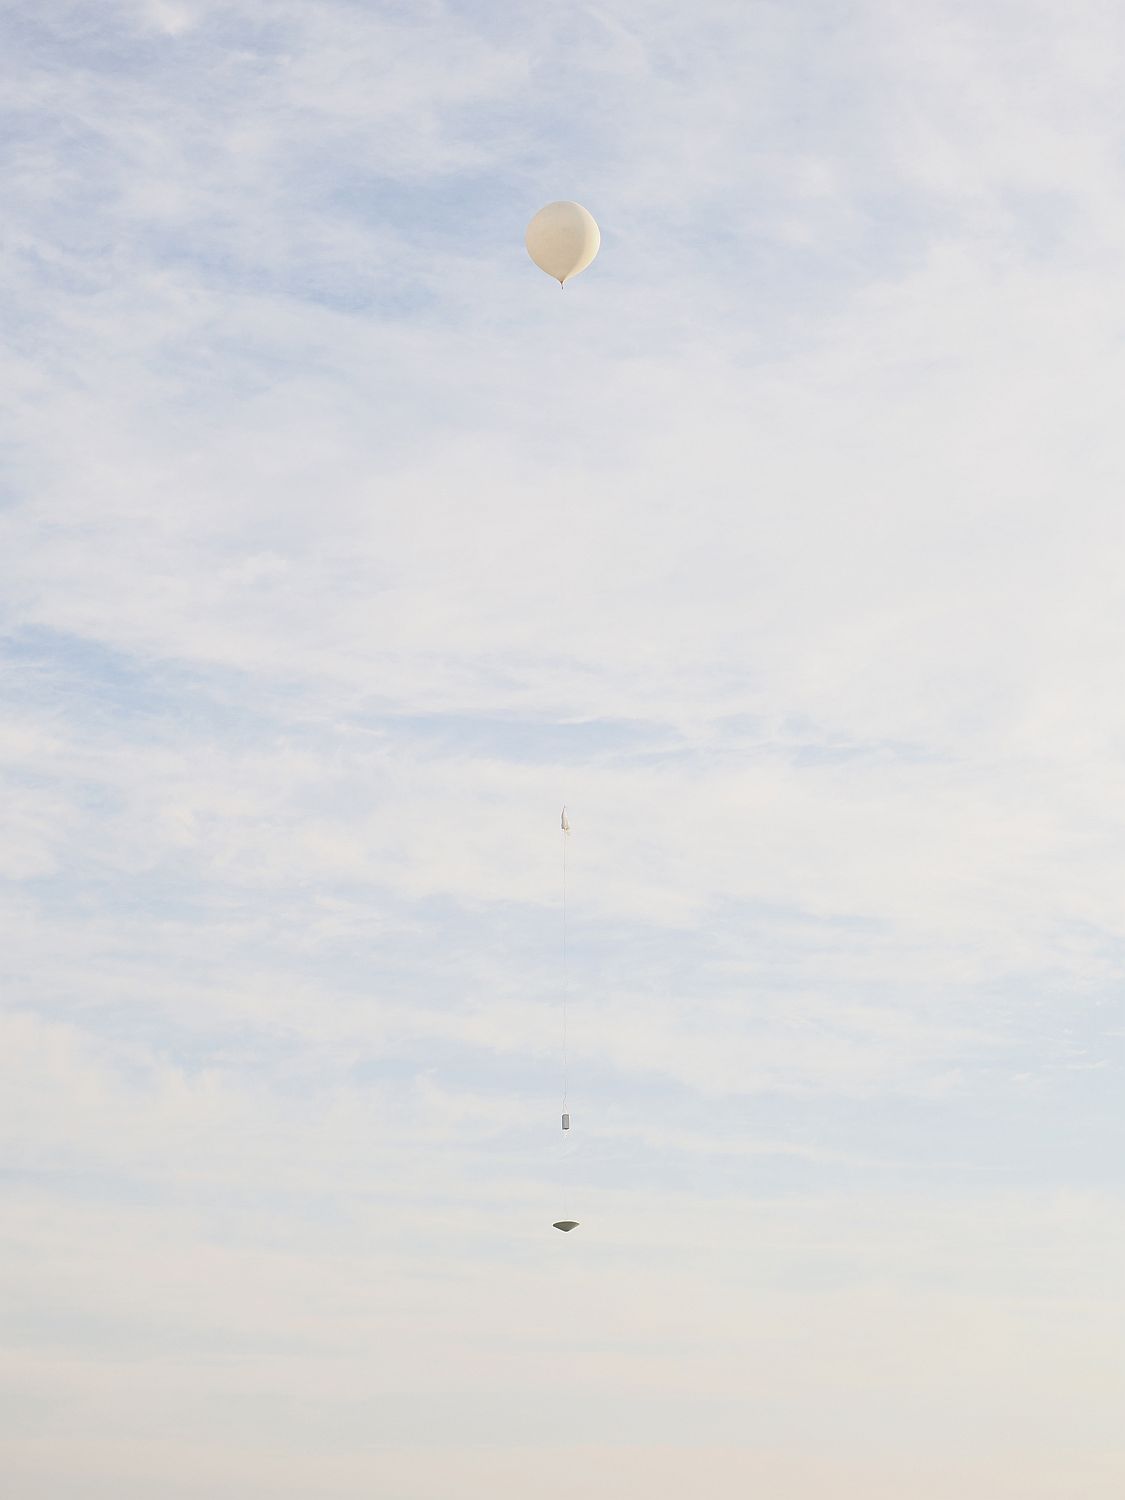 Balloon release in early morning at Taiki  (Image: ISAS/JAXA)